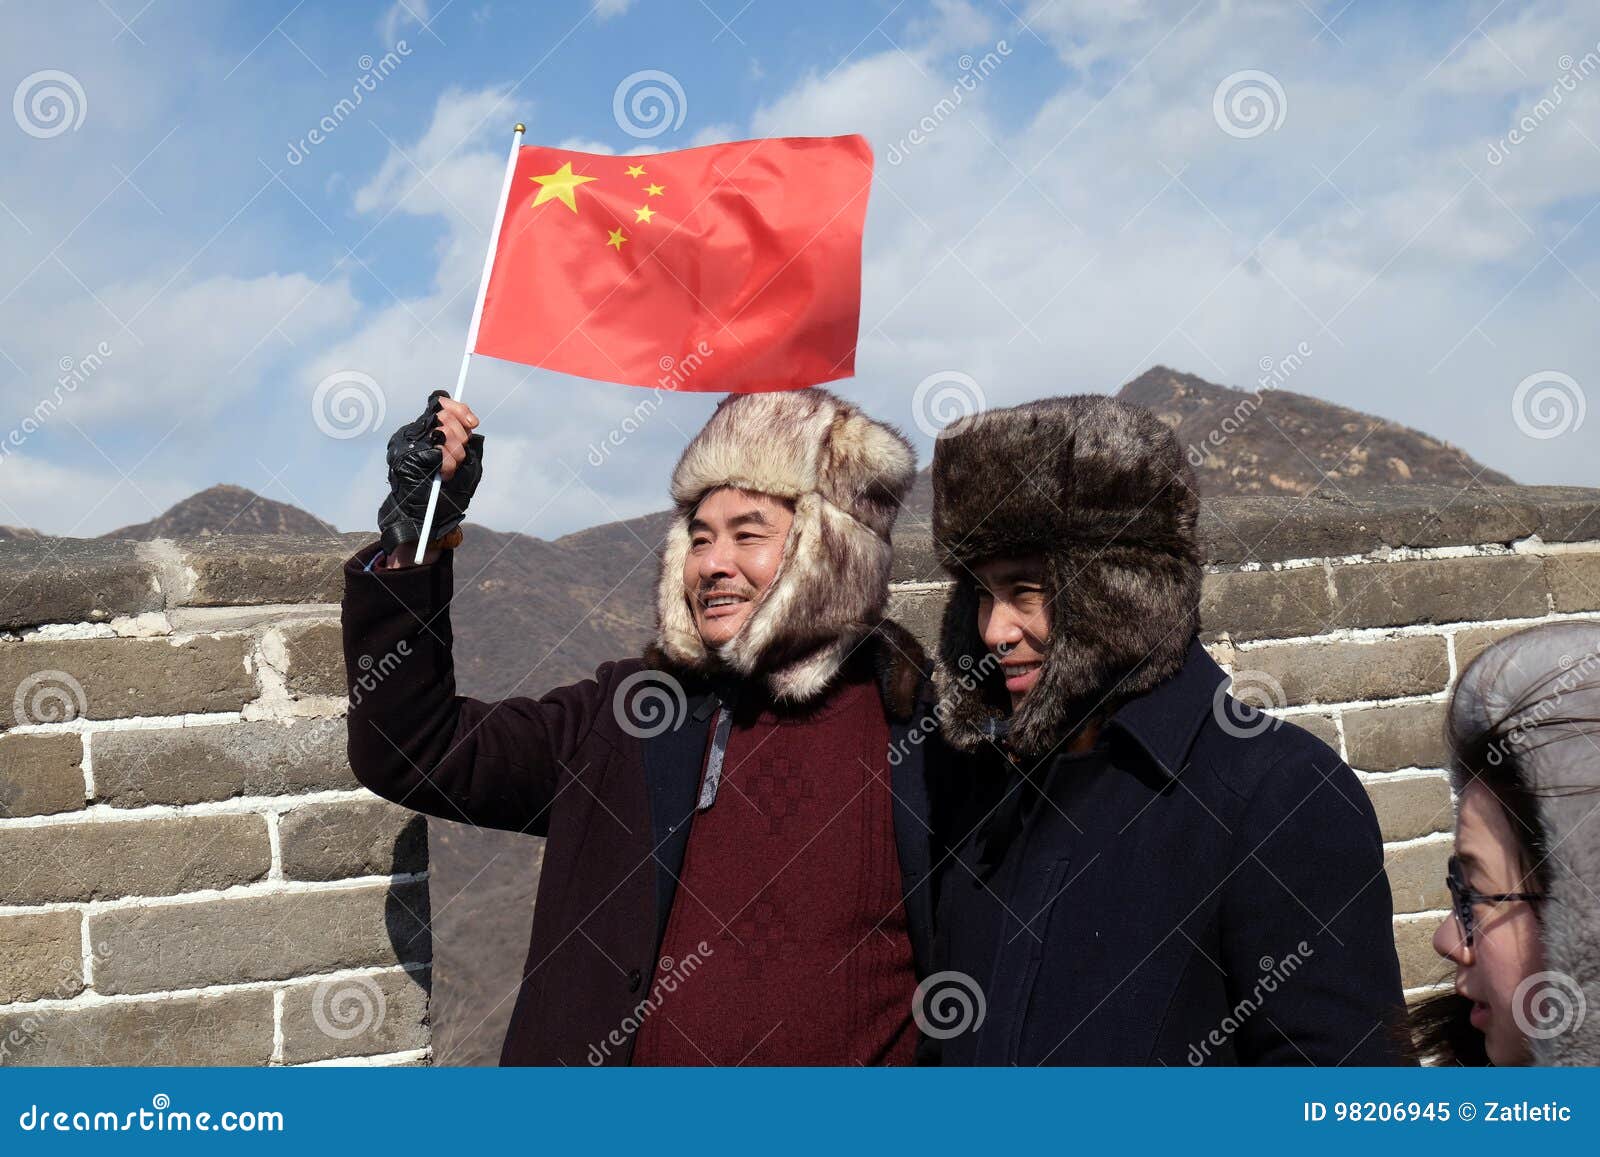 Chinese Tourists Visiting The Great Wall Of China Near Badaling, China Editorial Image - Image ...